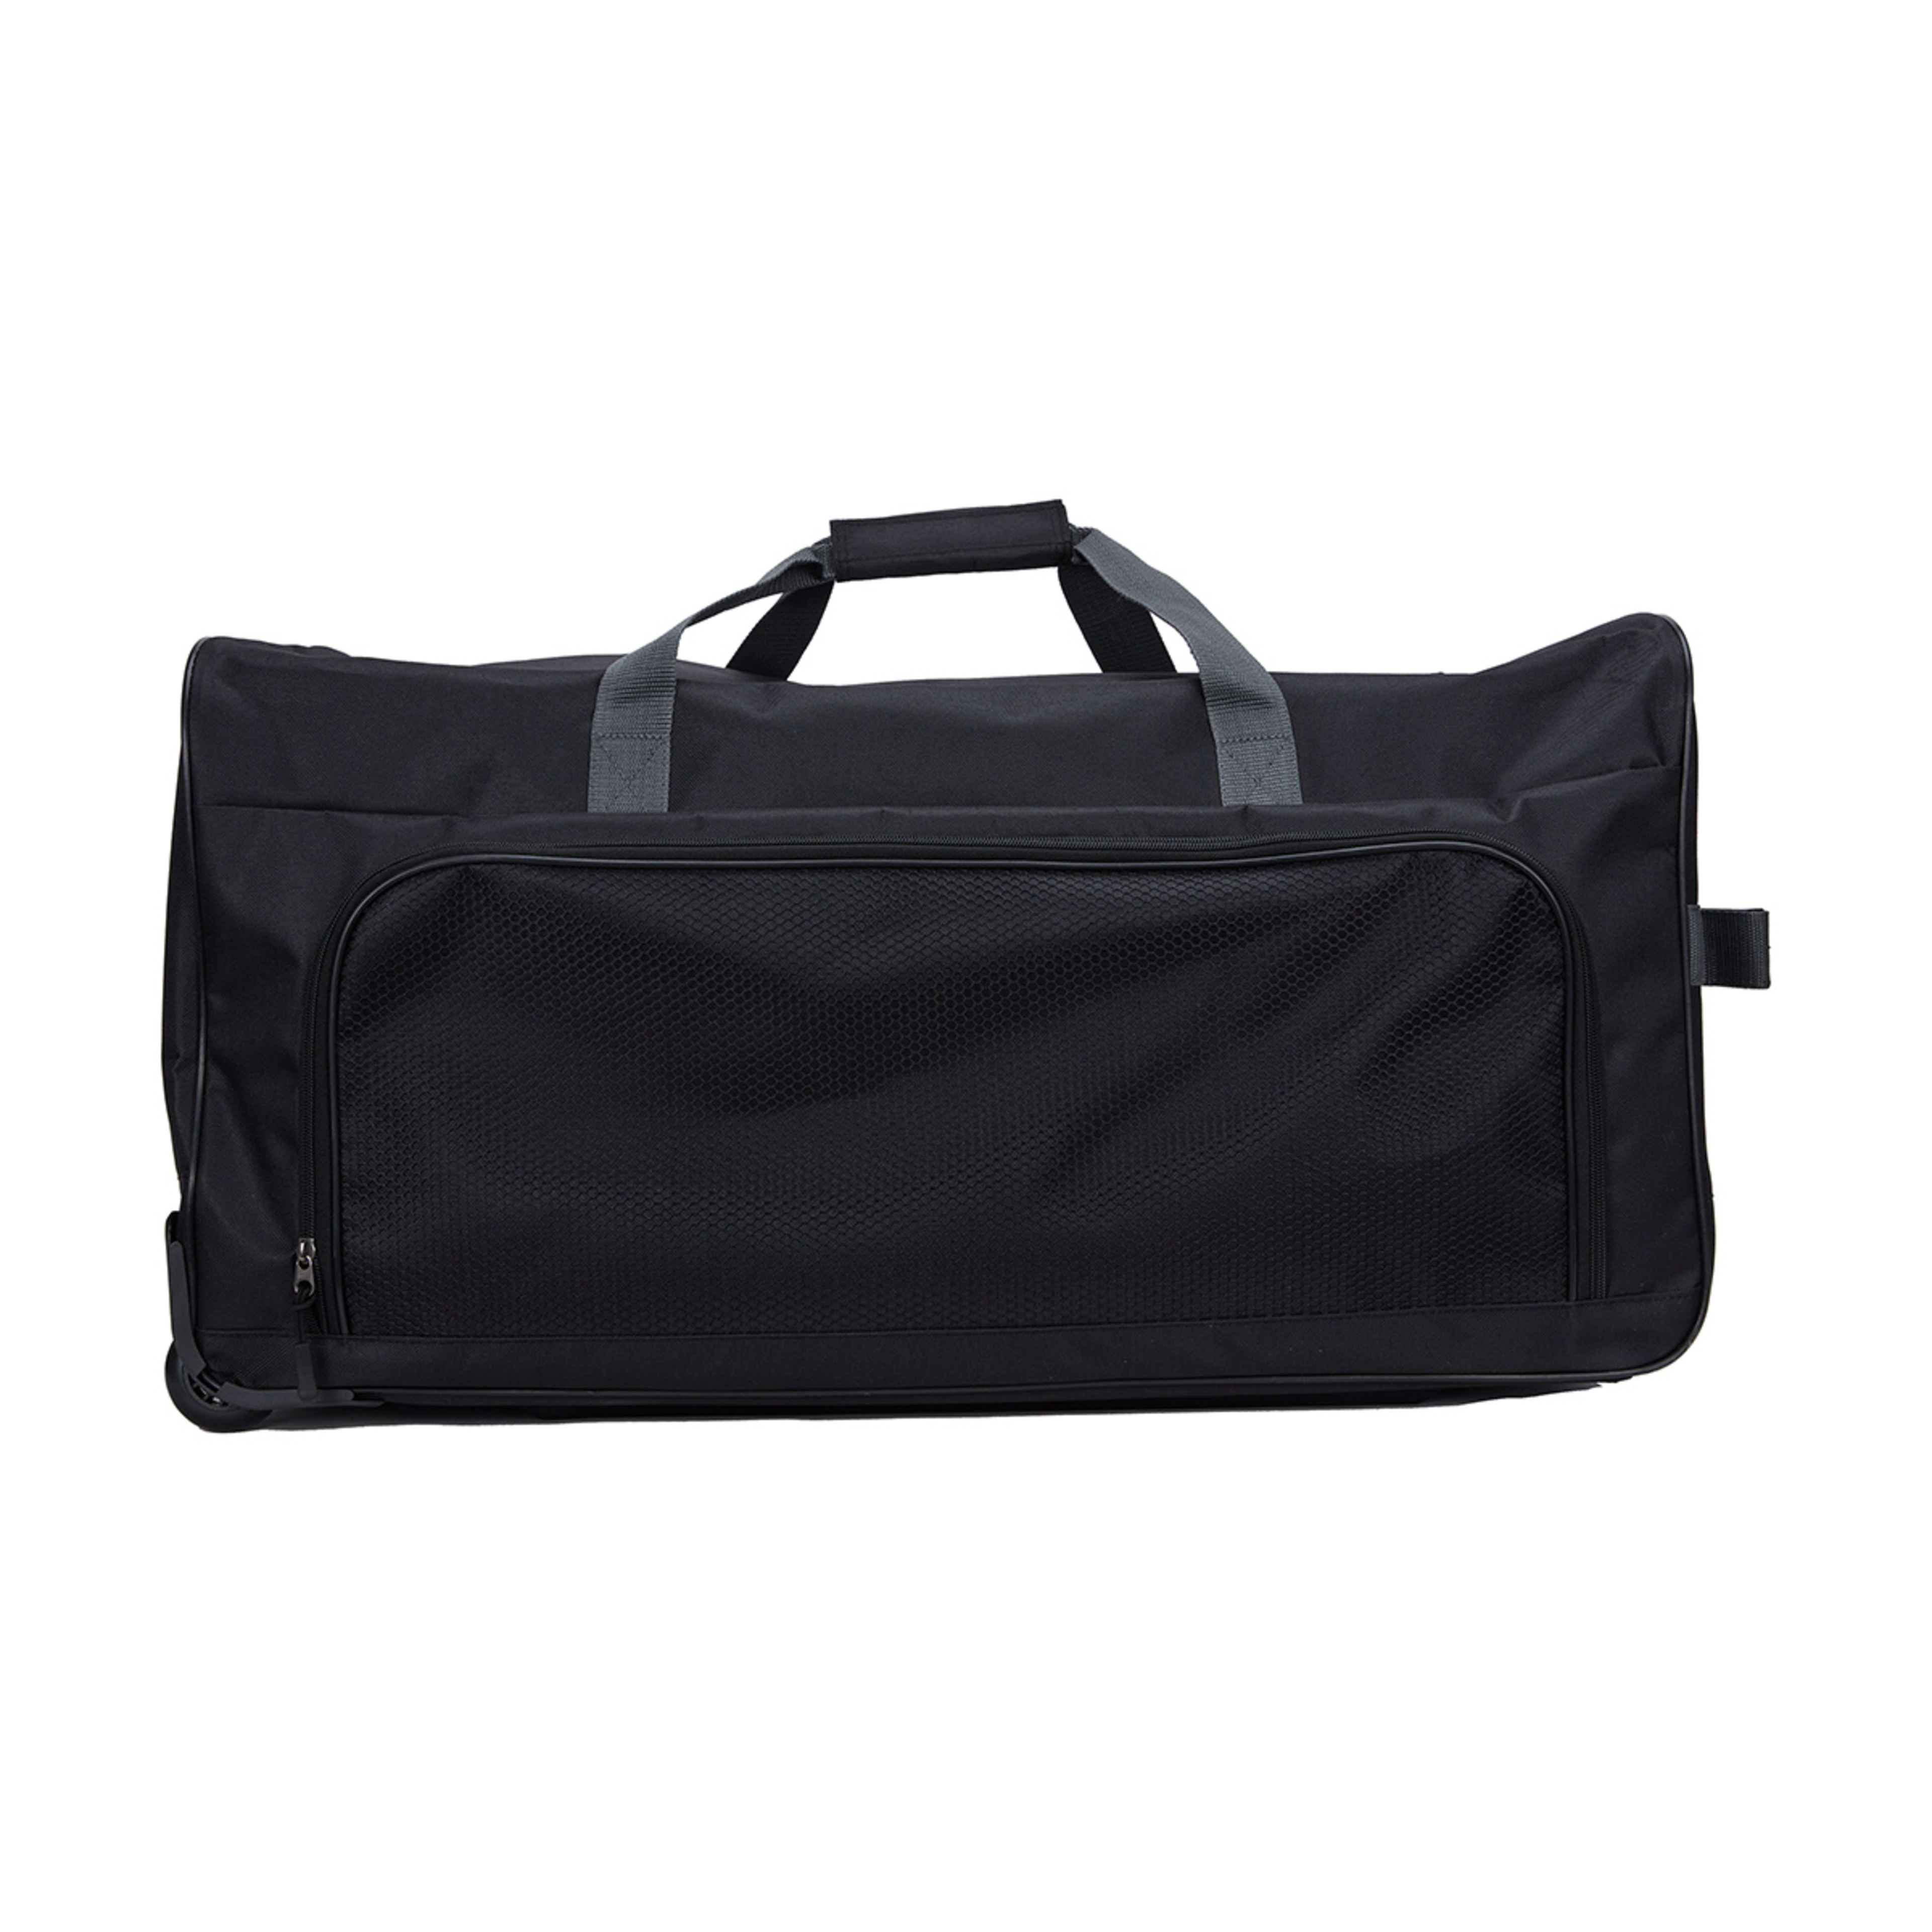 Large Duffle Bag with Wheels - Black - Kmart